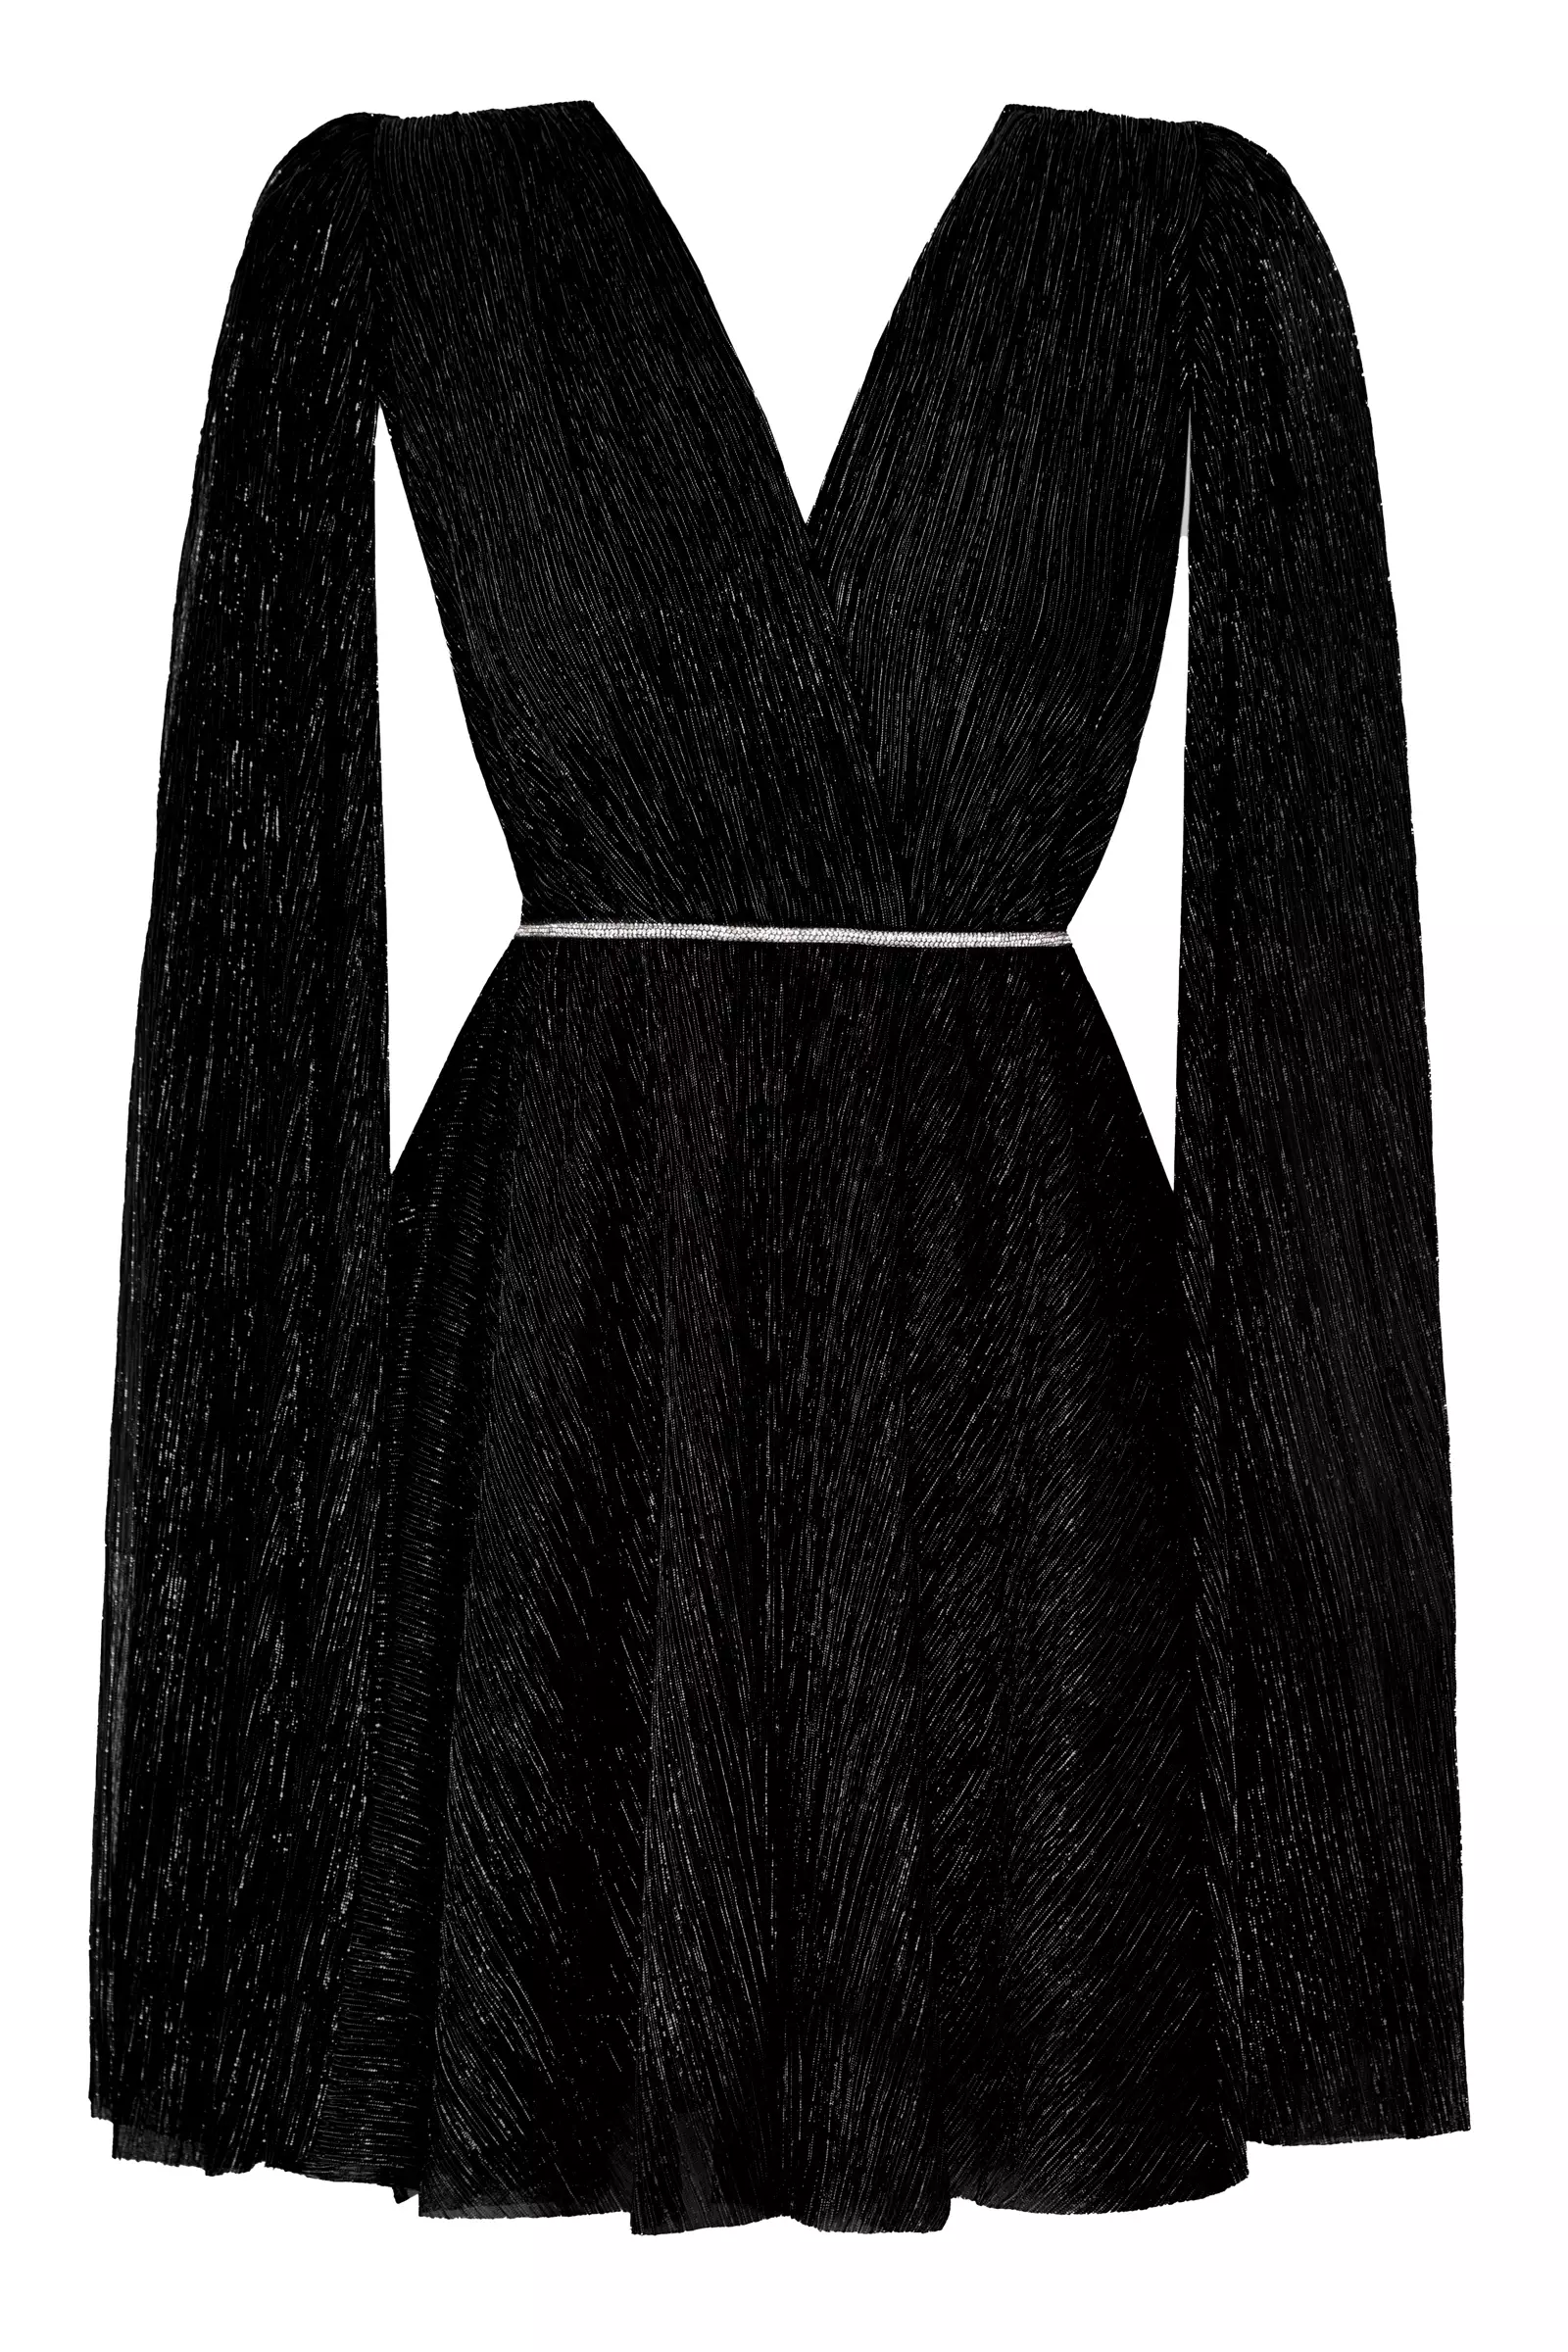 Black moonlight long sleeve mini dress